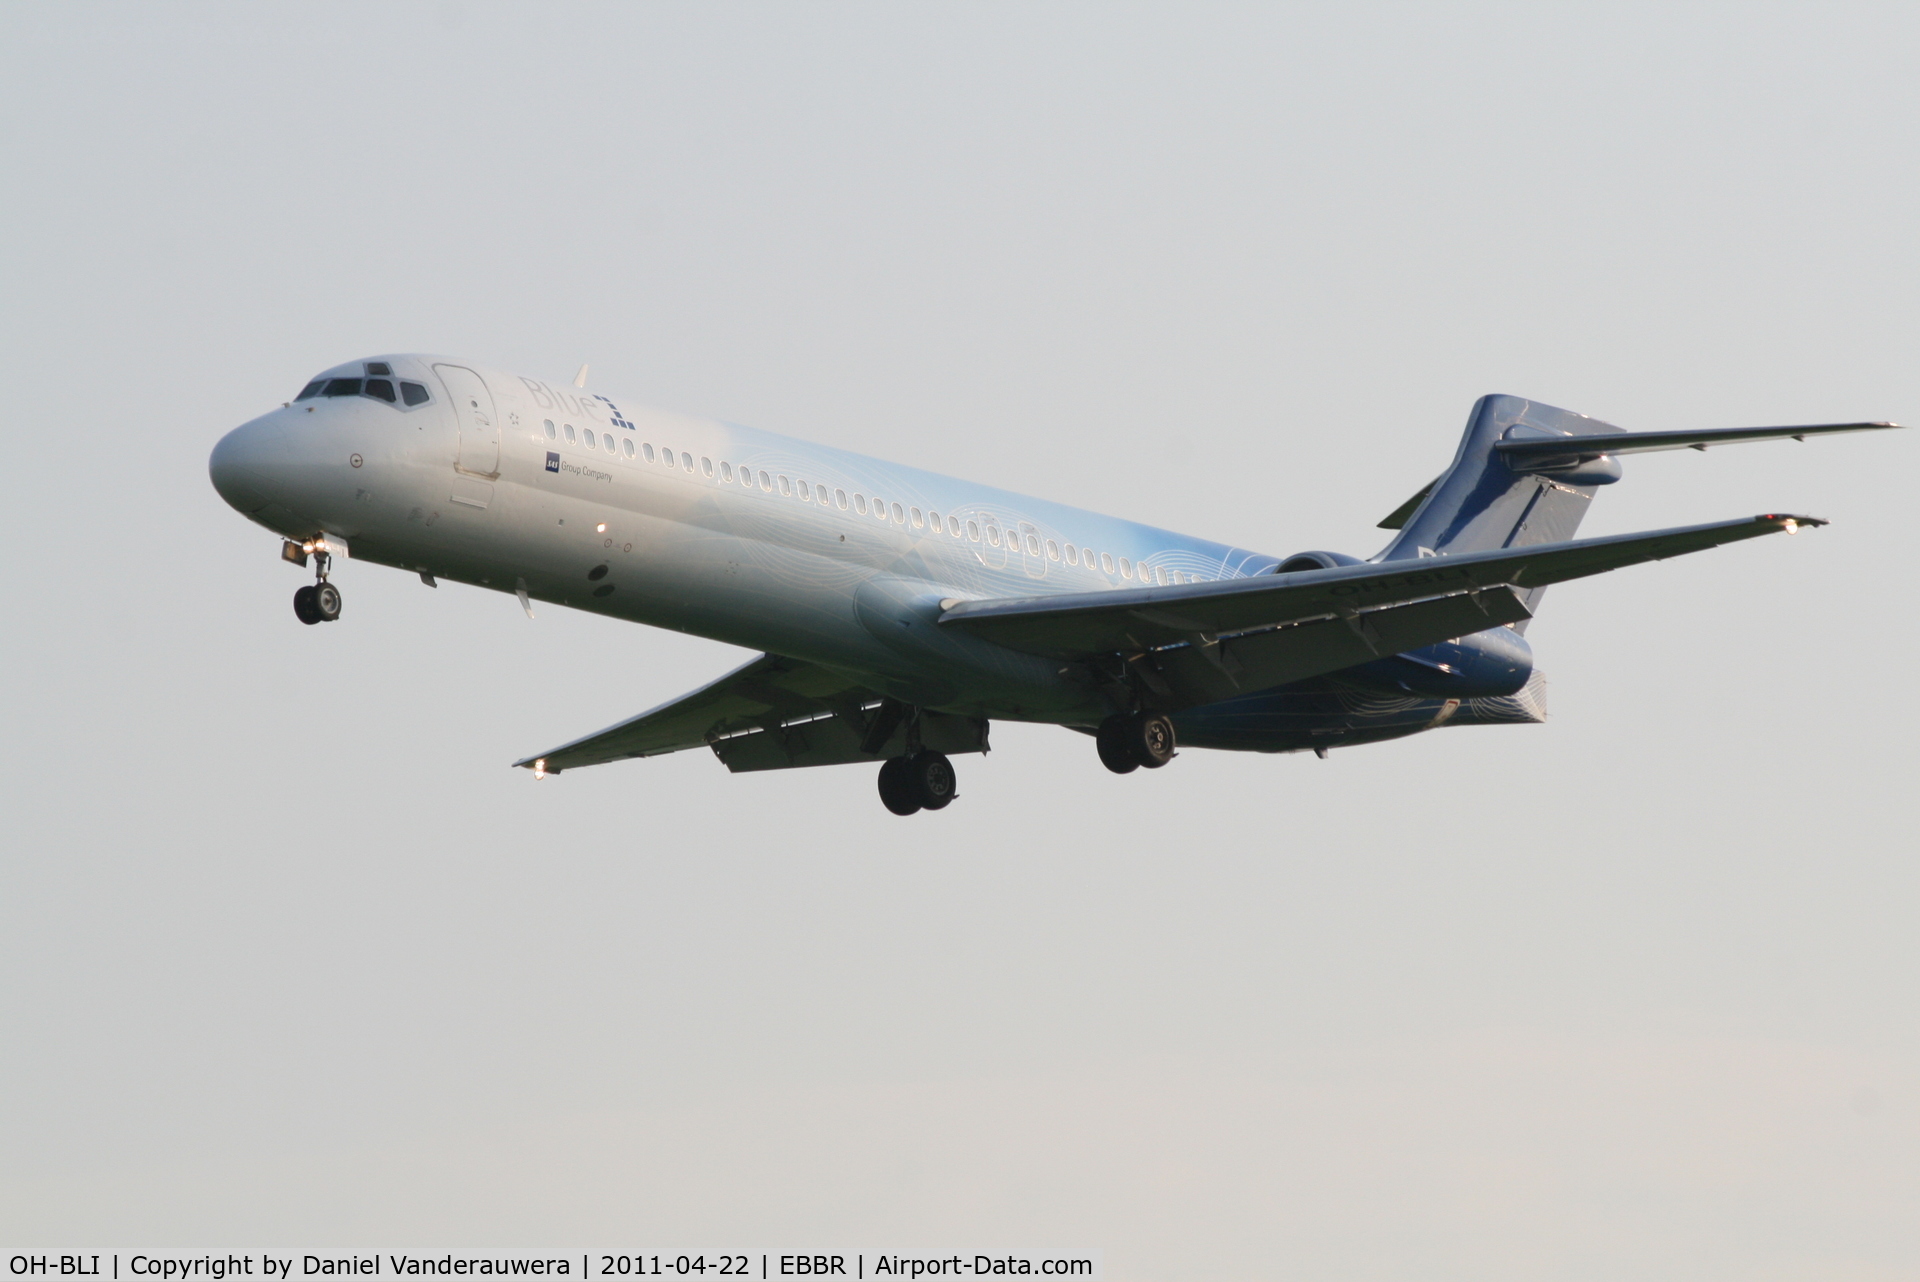 OH-BLI, 2000 Boeing 717-2CM C/N 55061, Arrival of flight KF801 to RWY 25L